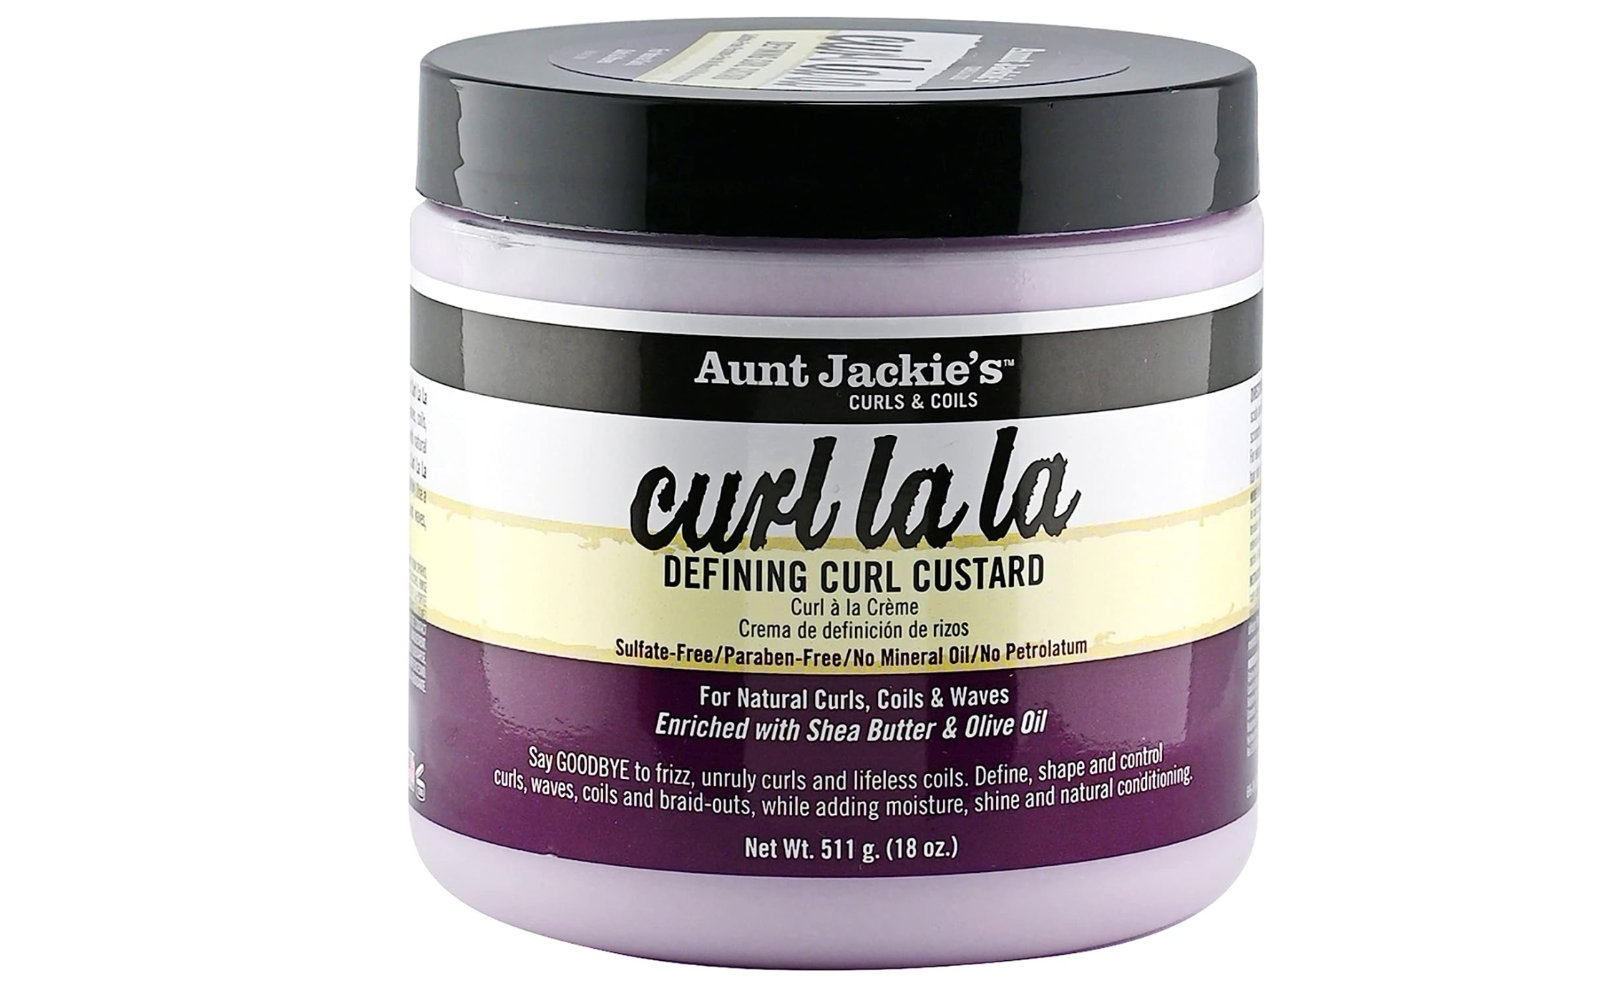 Aunt Jackie’s Curl La La Defining Curl Custard Sulfate & Paraben Free 426g